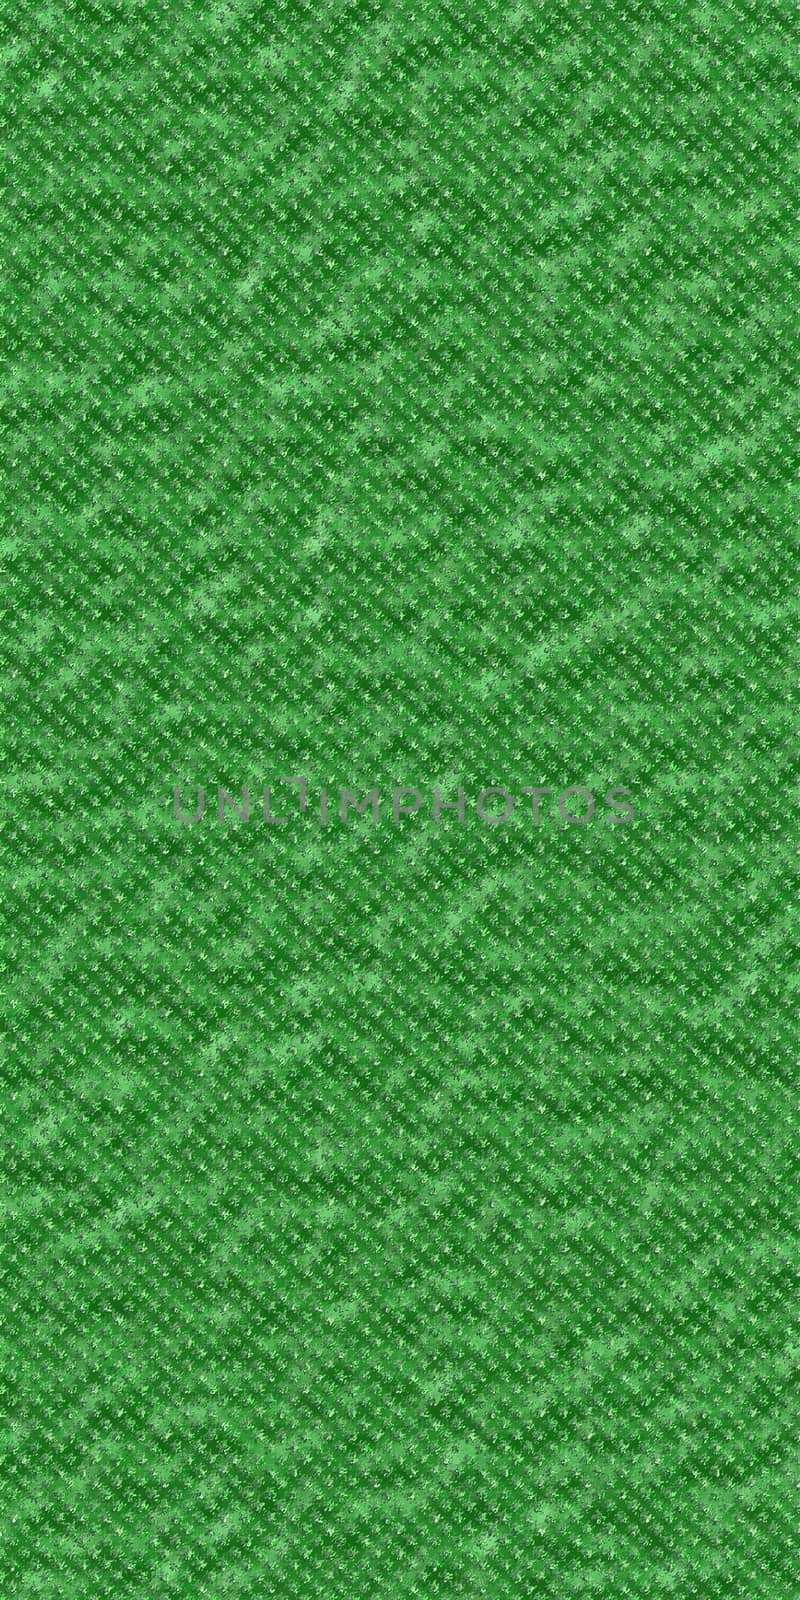 Liquid metal blot on green background